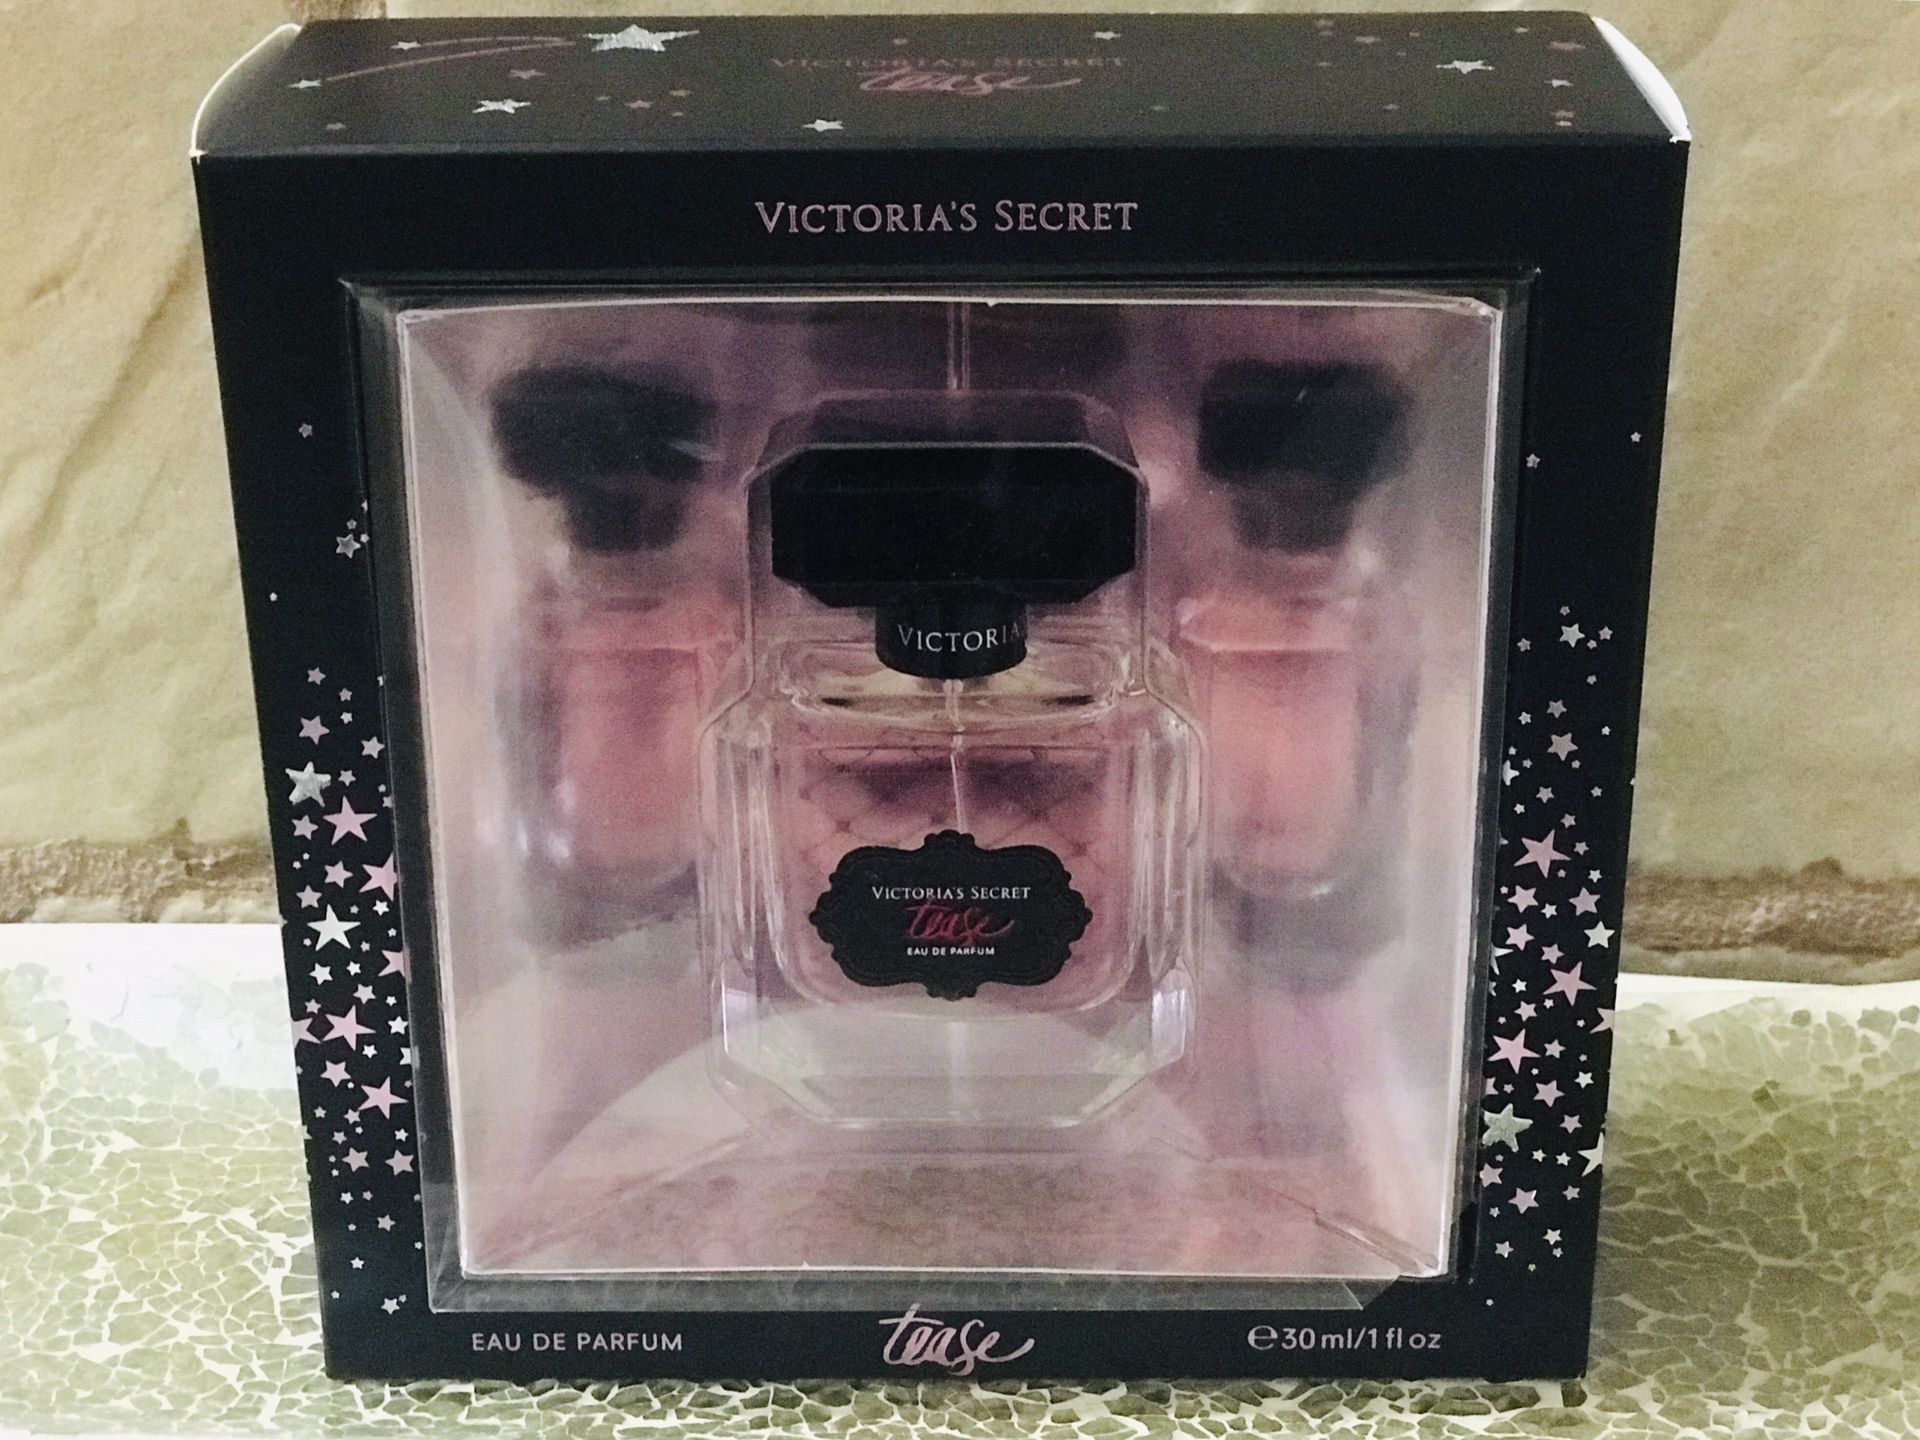 New Victoria’s Secret Tease perfume